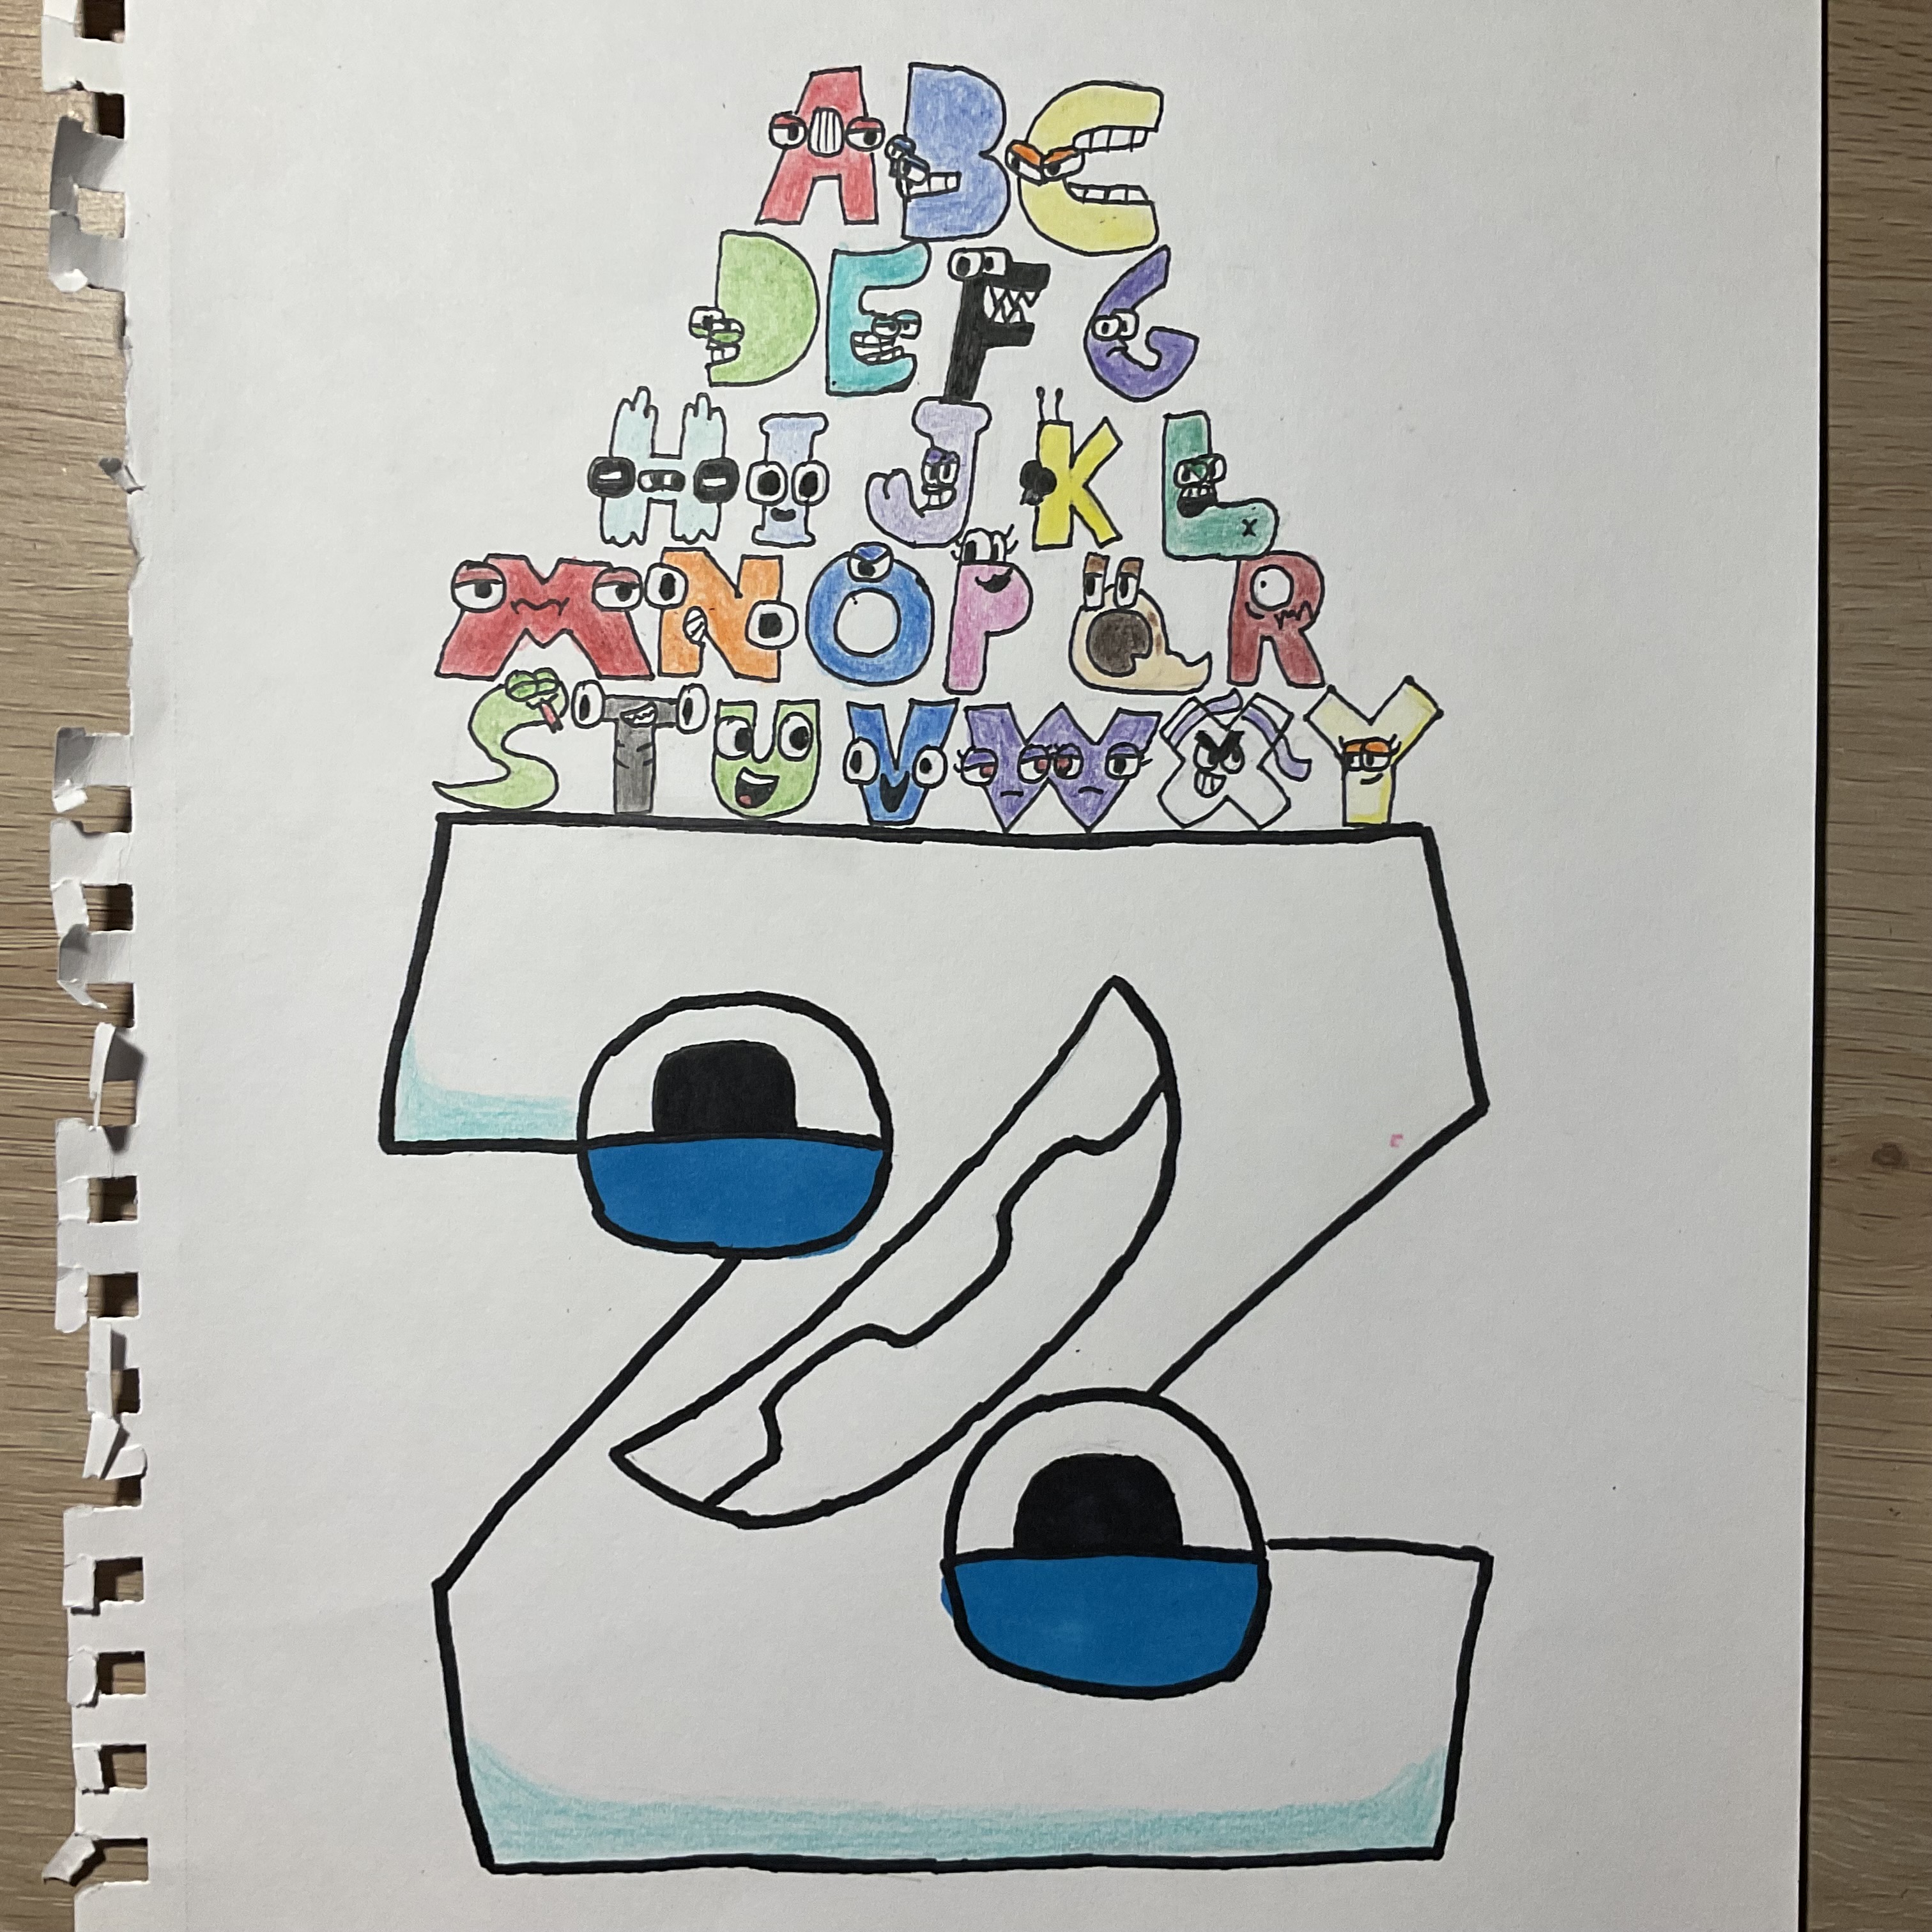 Alphabet Lore #1 (ABC) by MediaAzuretheCatYT on DeviantArt